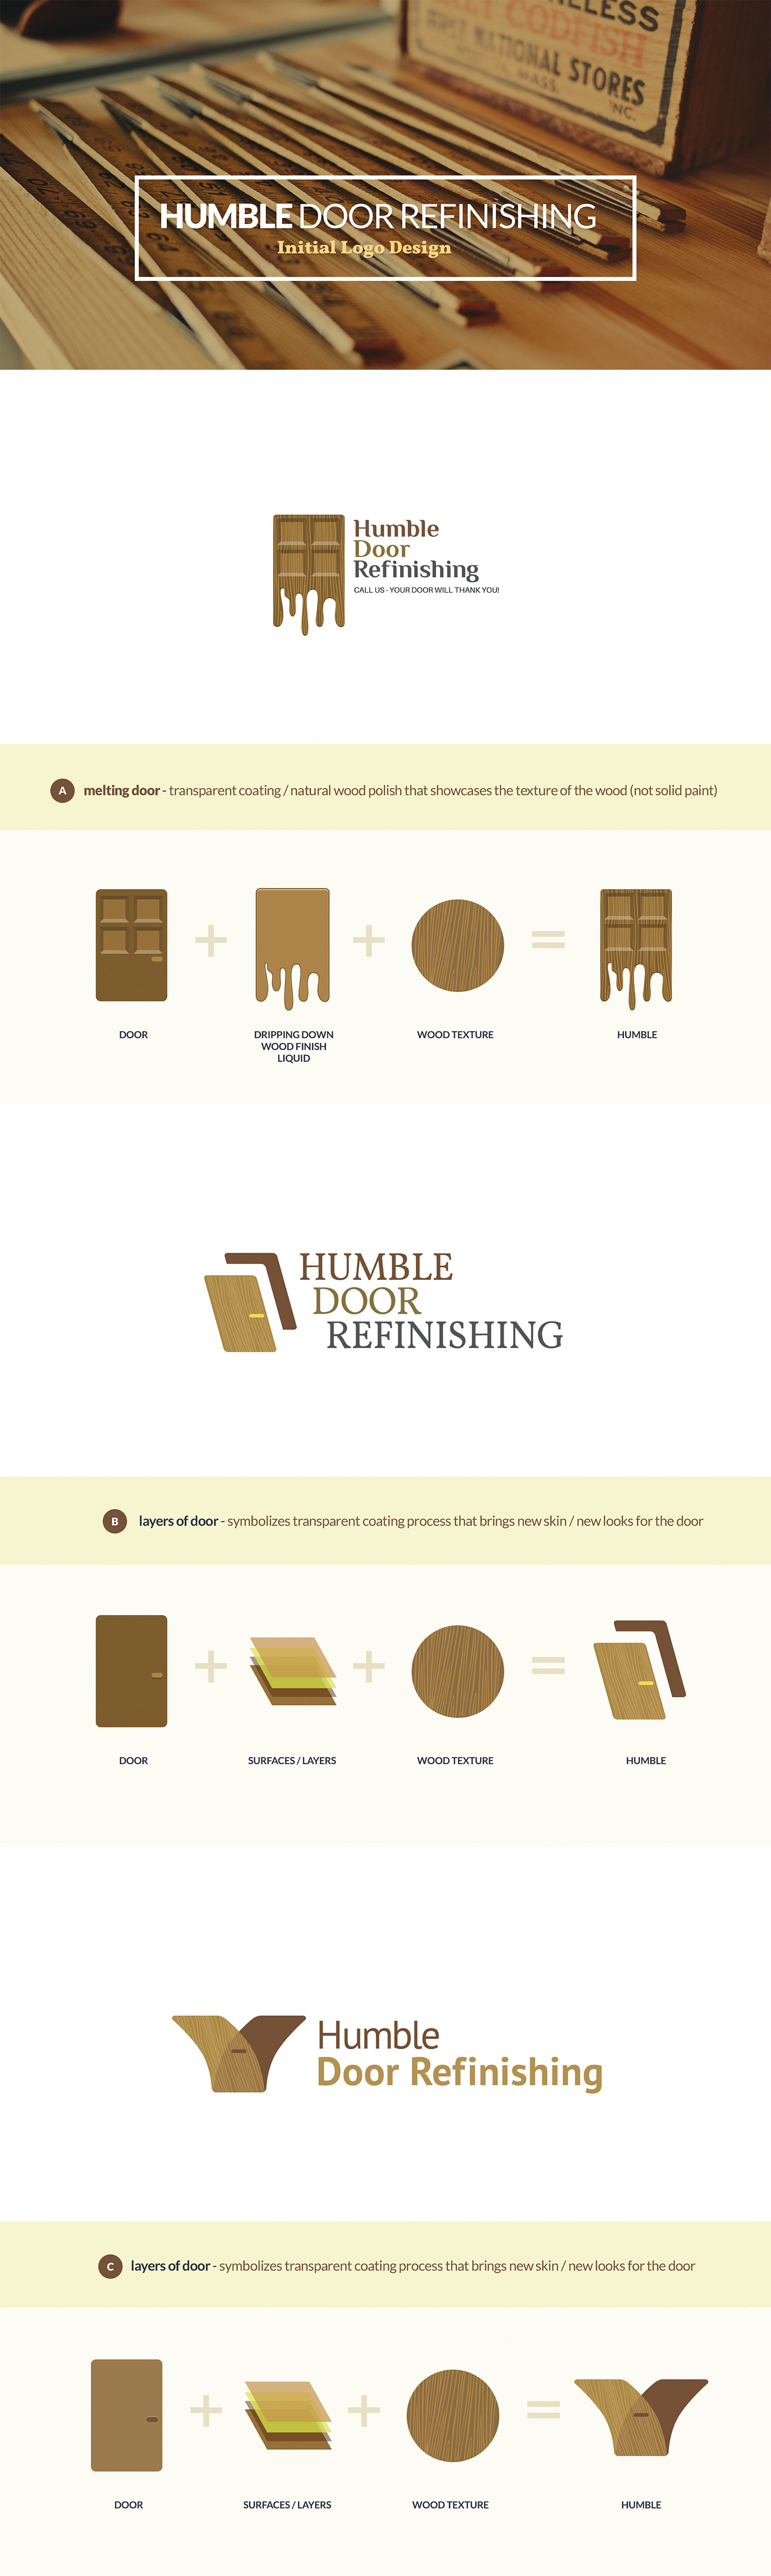 branding-humble_door_refinishing-propose